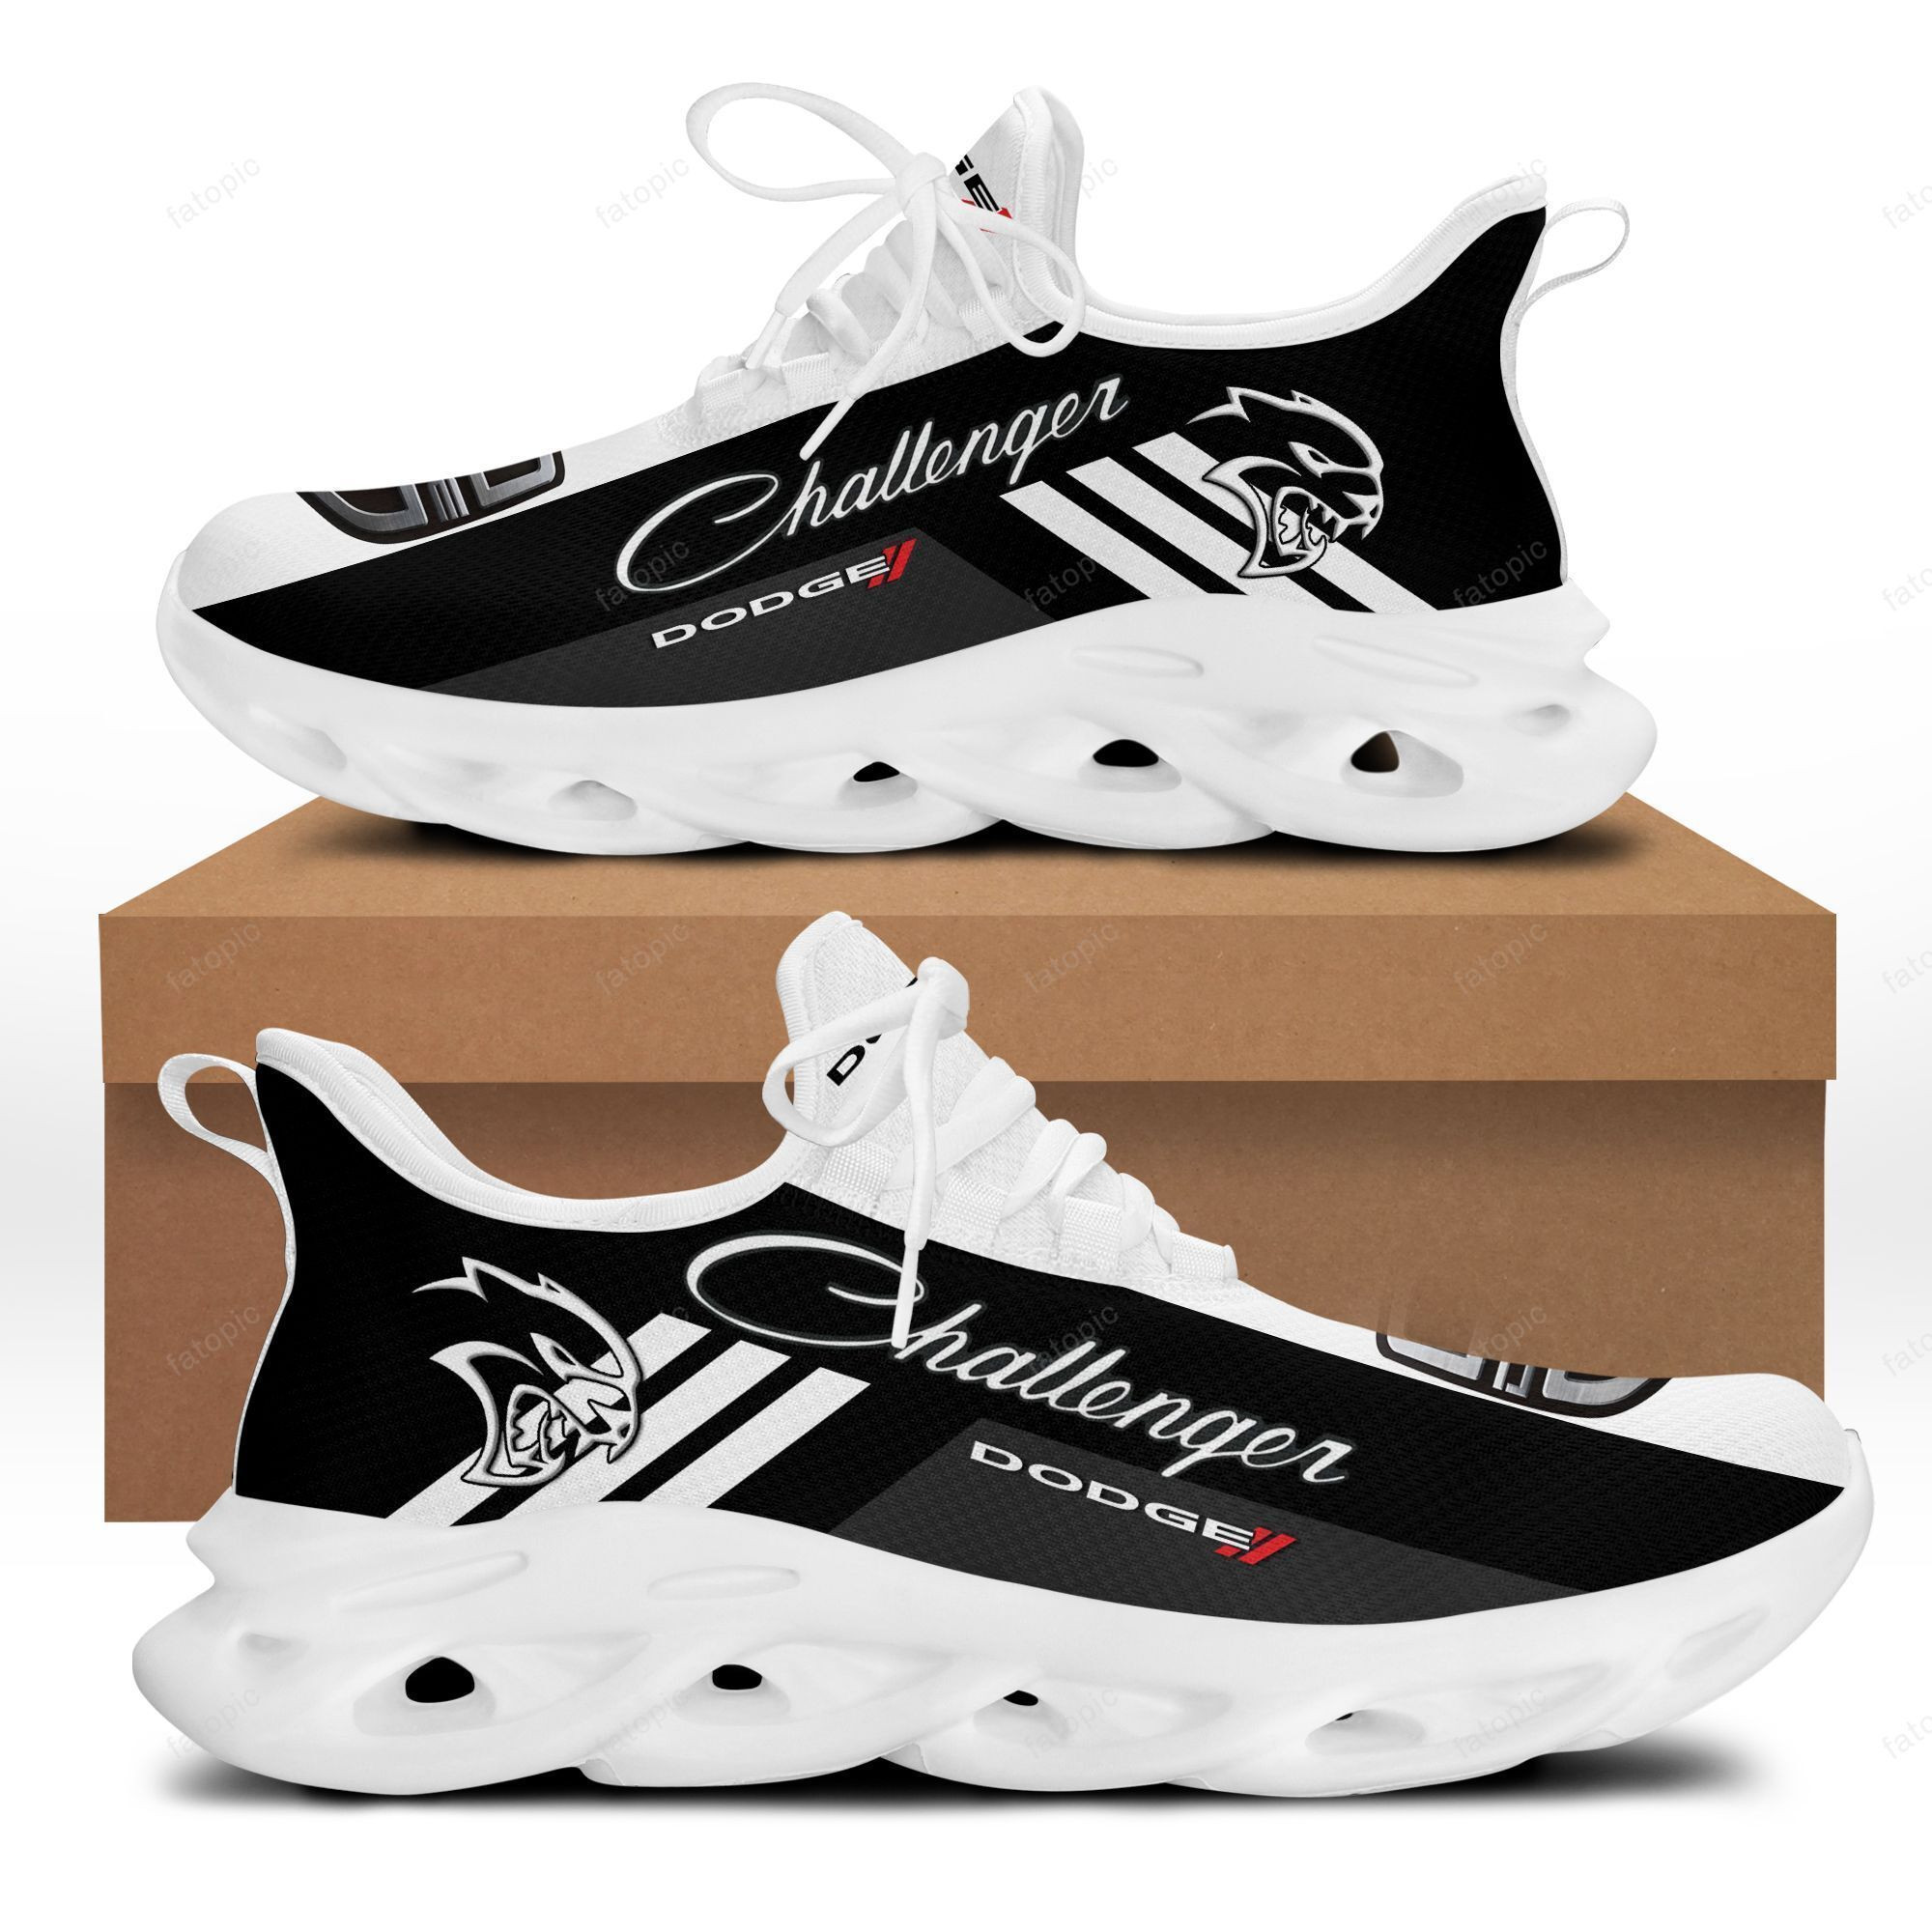 Dodge Challenger Bs Running Shoes Ver 4 (White) – Crocs Shoes Shop